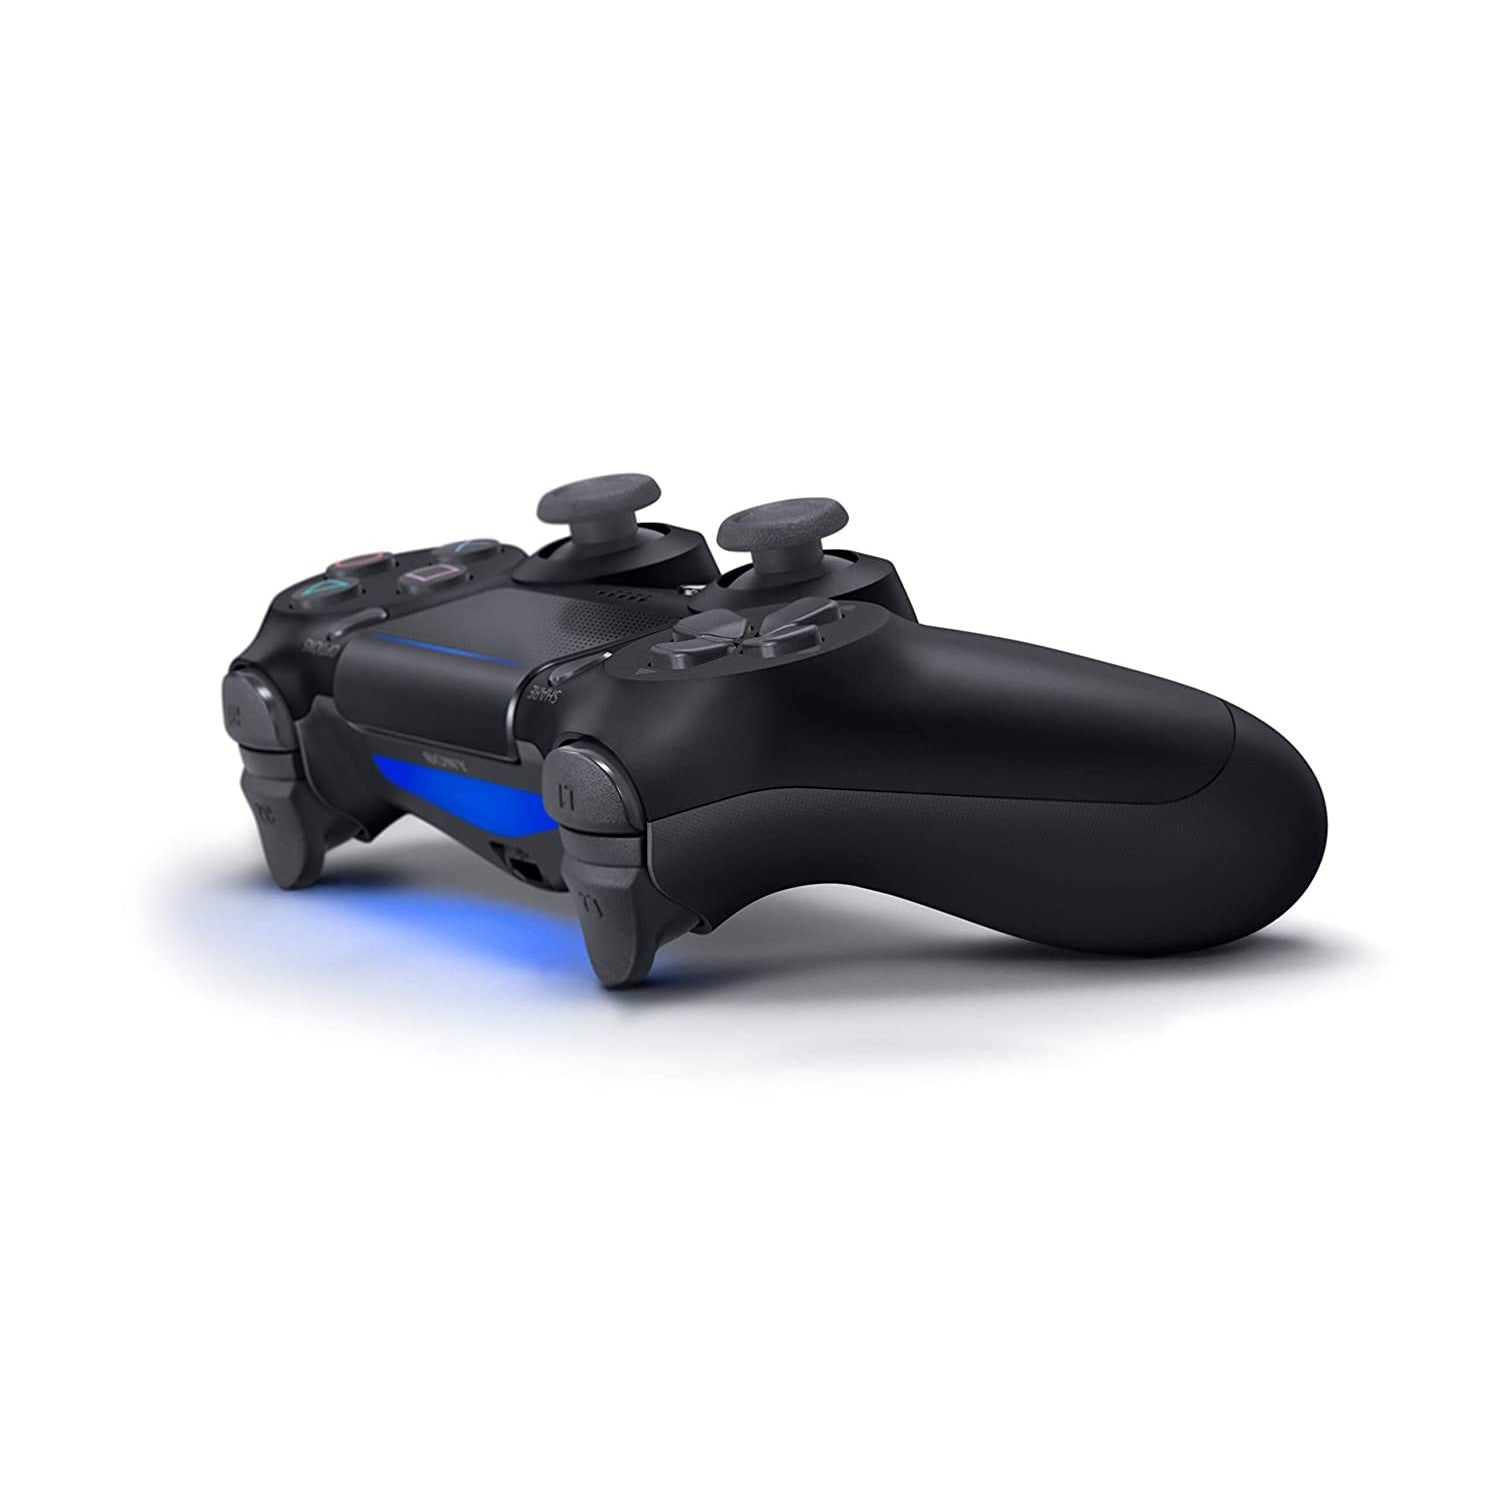 Sony PS4 PlayStation 4 DualShock Controller Joystick – Black (Seller Refurbished) Sony